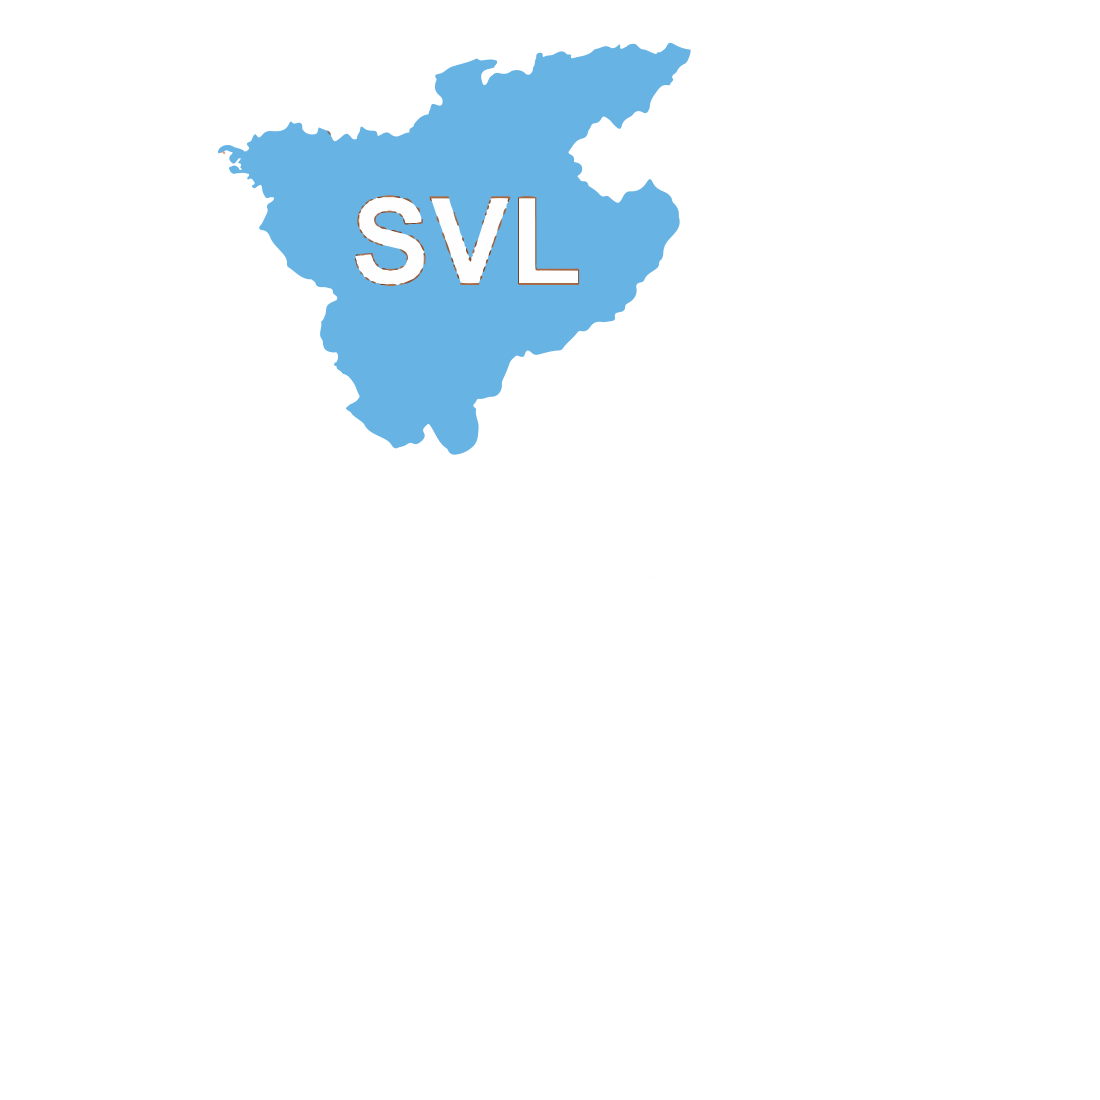 Le territoire du SVL